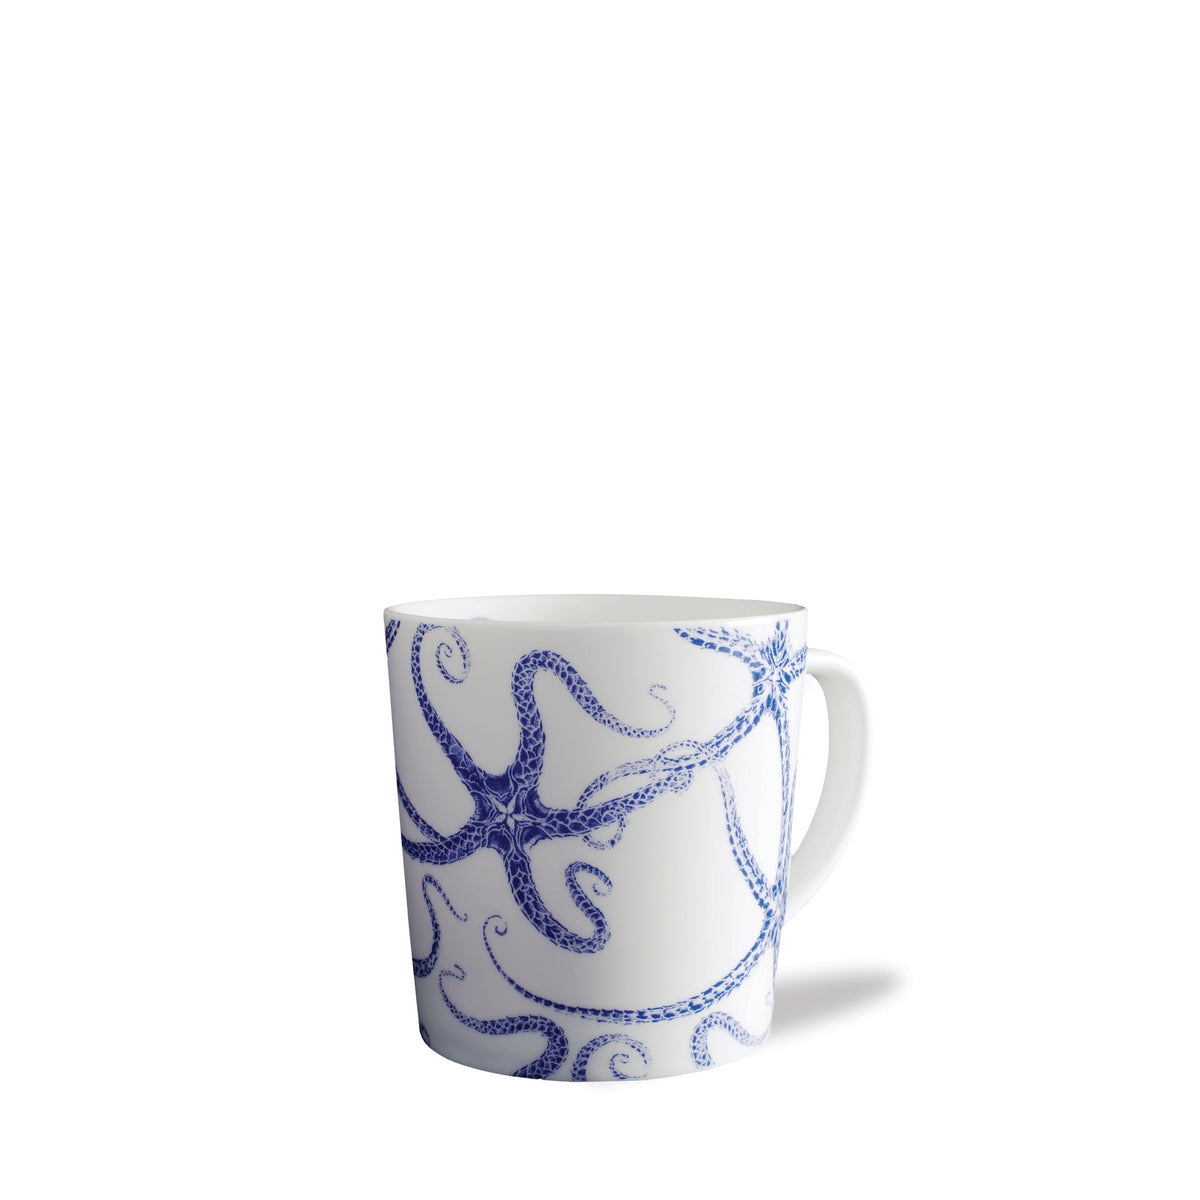 Starfish blue and white mug from Caskata.